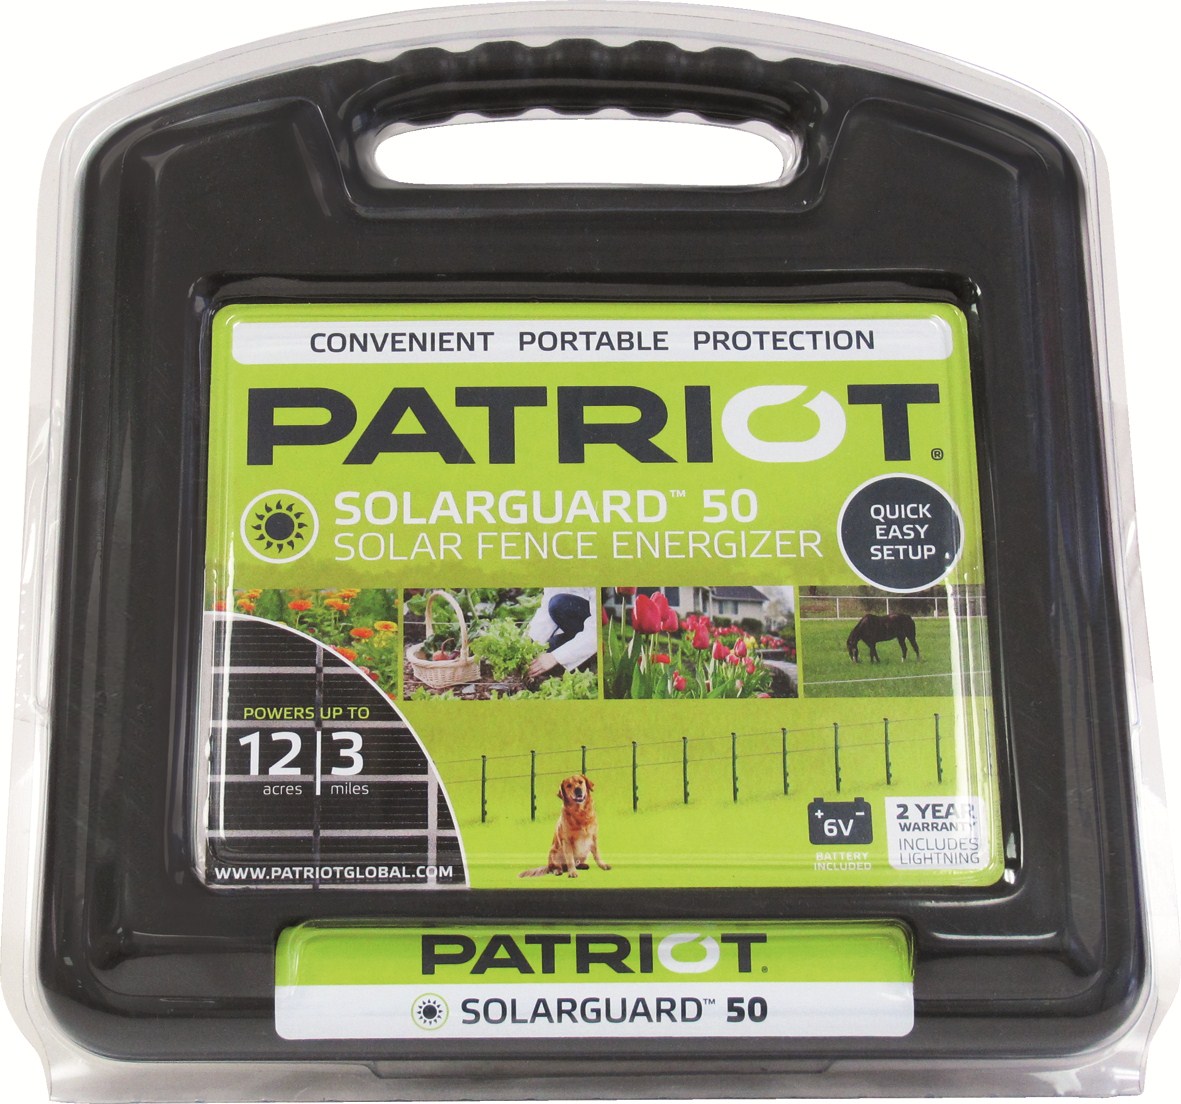 Patriot Solar 80 Fence Energizer